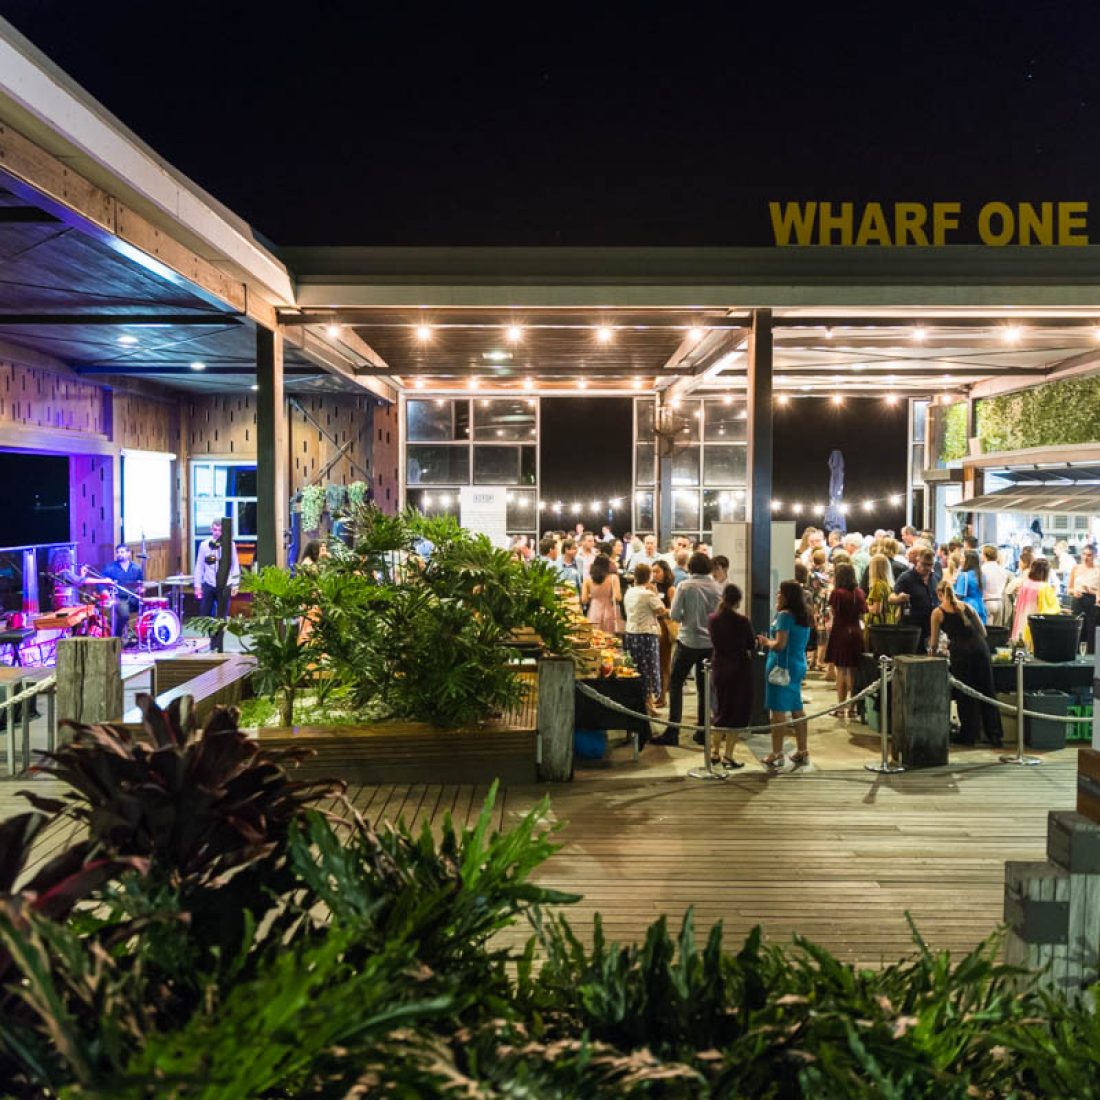 2022 Far North Queensland Region Architecture Awards - Wharf One, Cairns, 3 June 2022.